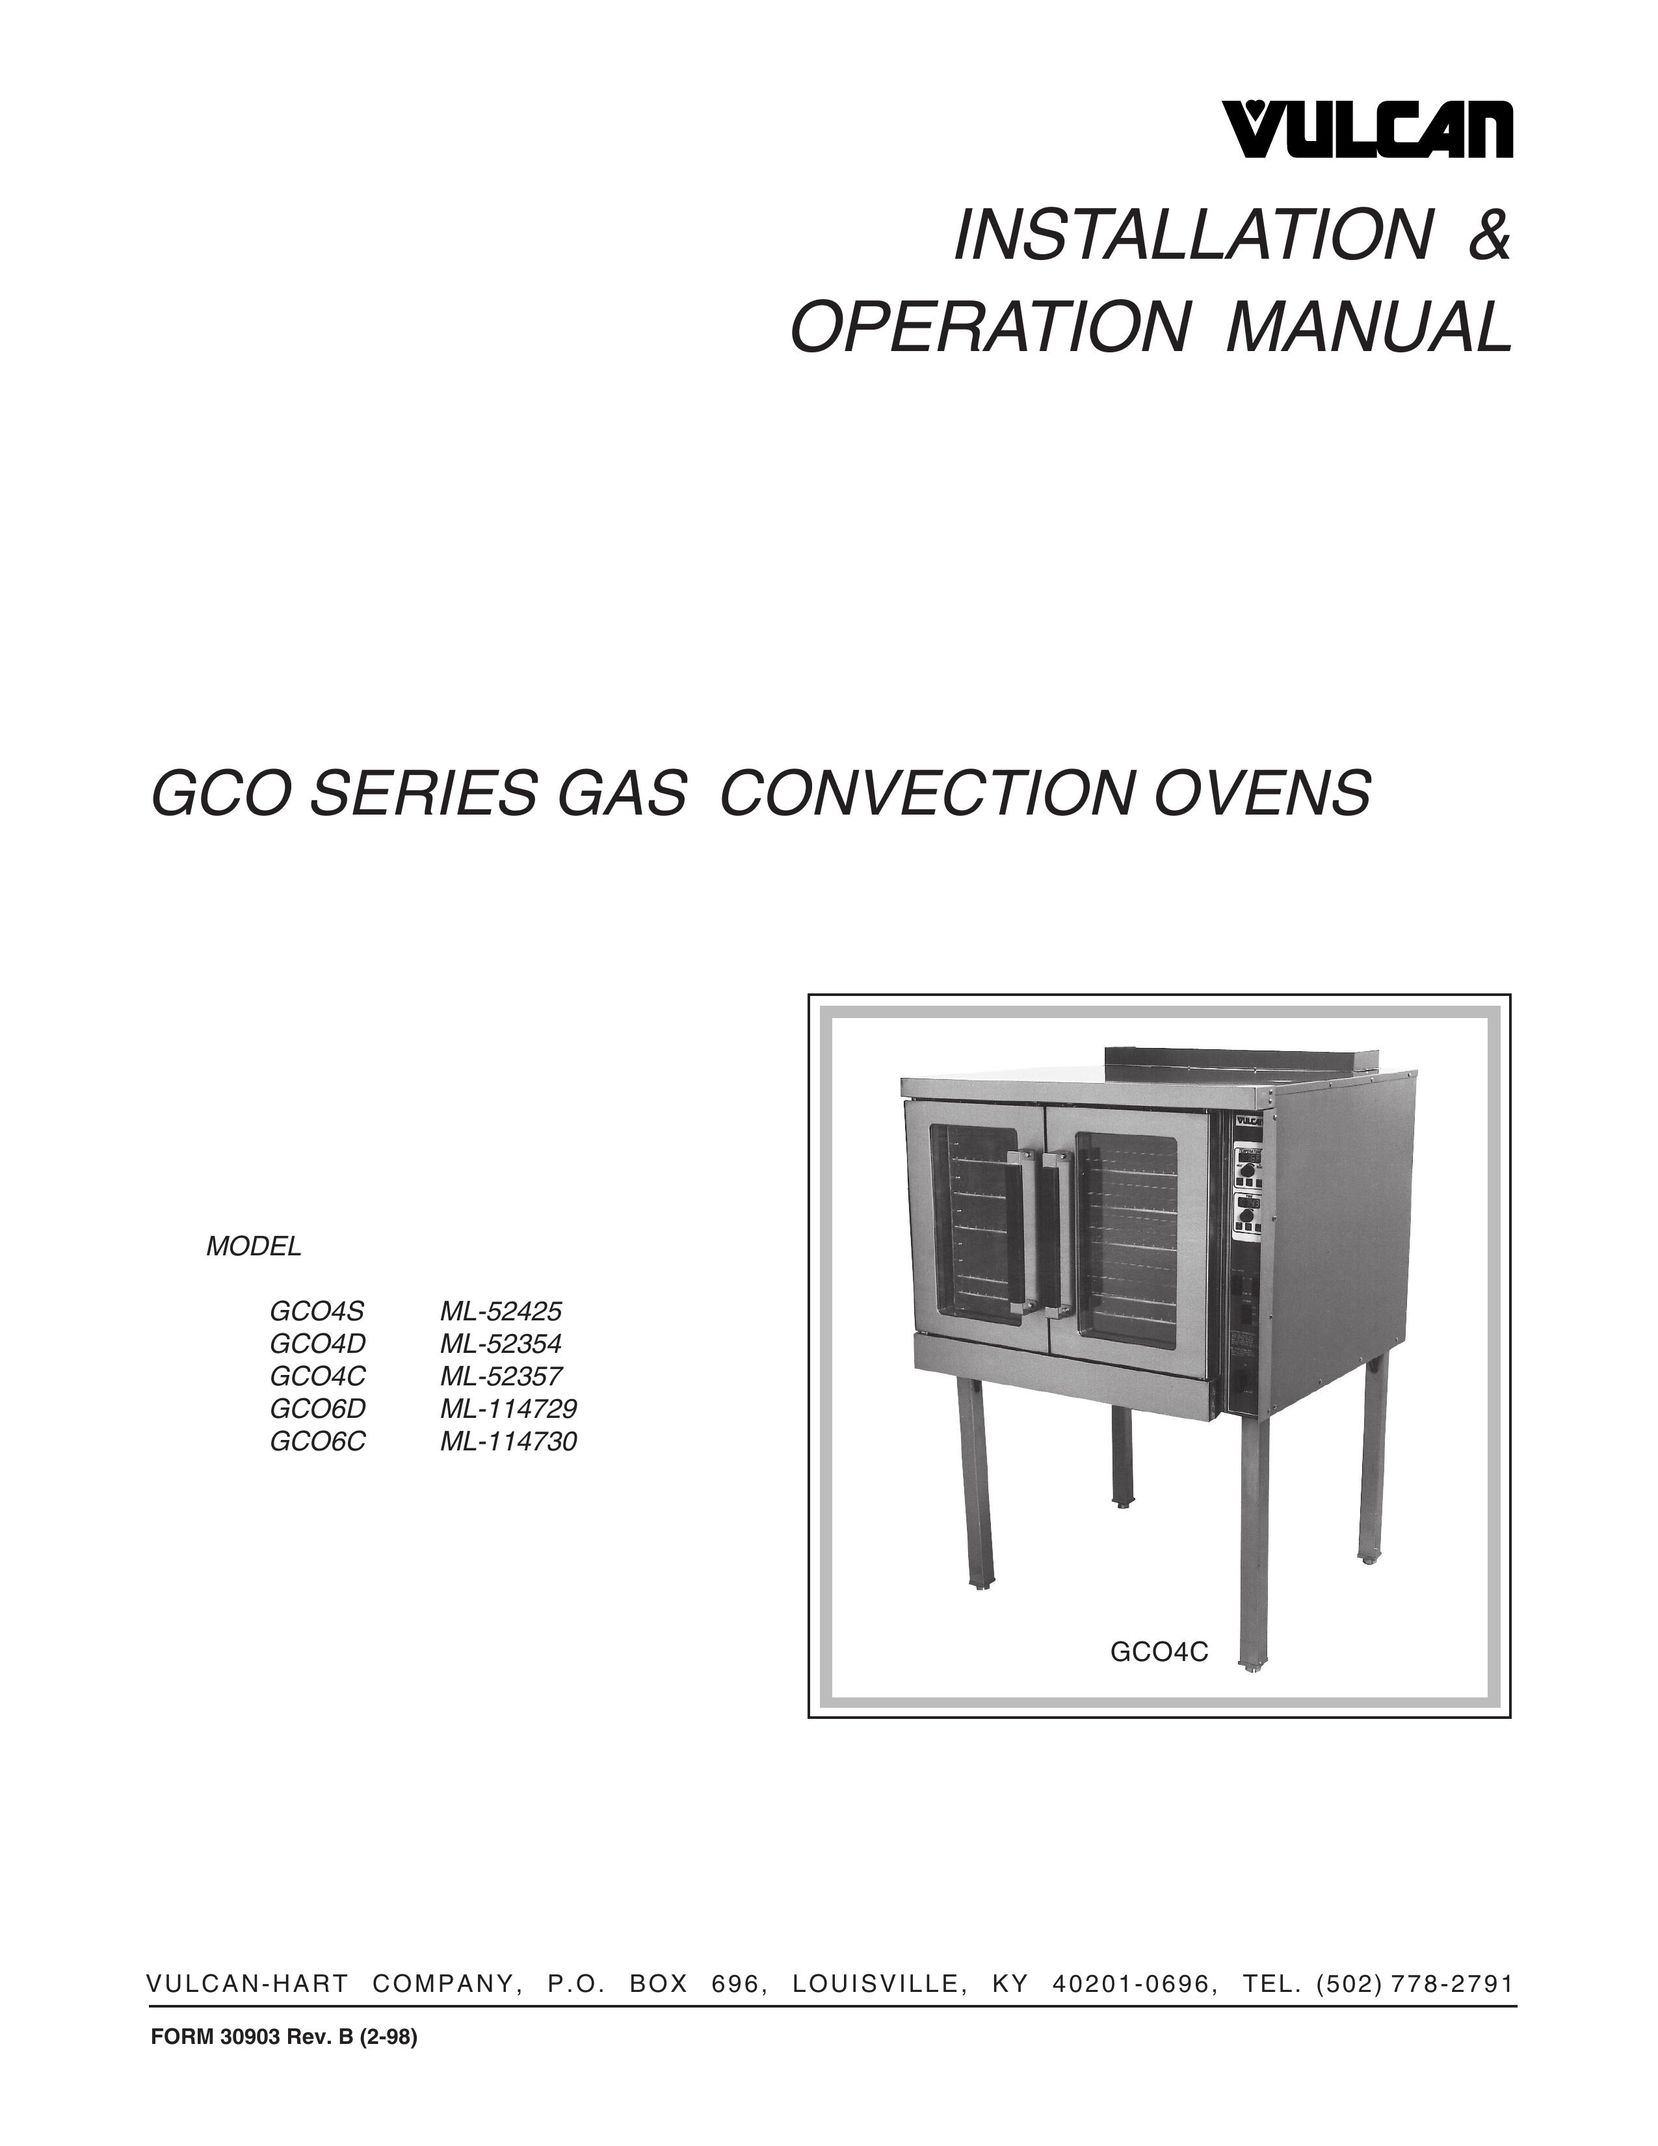 Vulcan-Hart GCO6D ML-114729 Oven User Manual